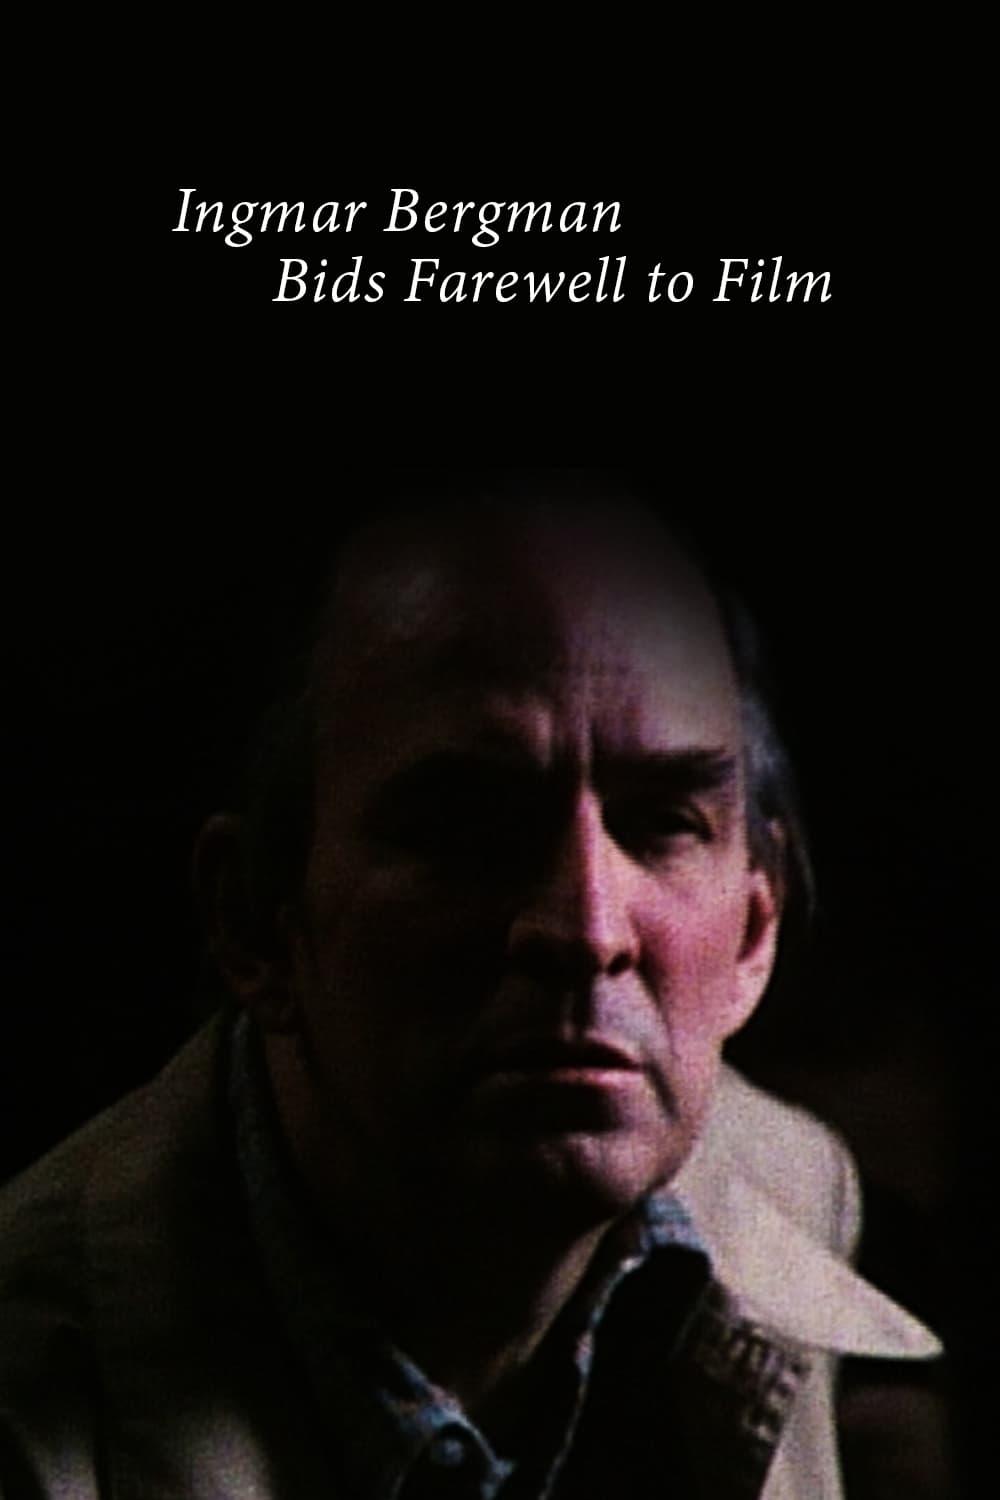 Ingmar Bergman Bids Farewell to Film poster